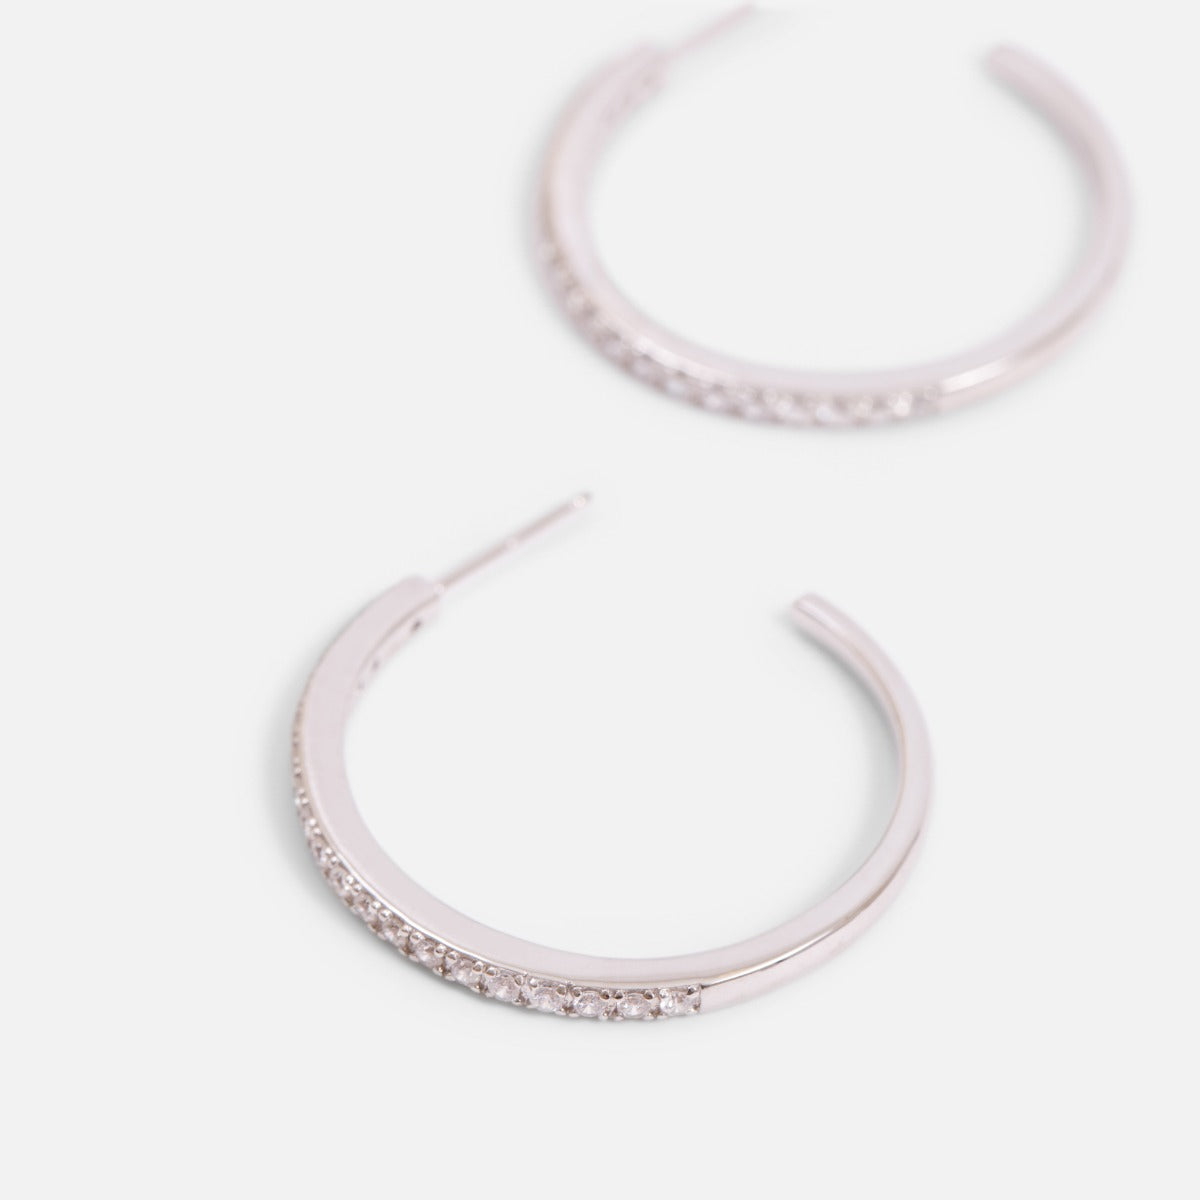 Sterling silver hoop earrings with cubic zirconia stones (30 mm)